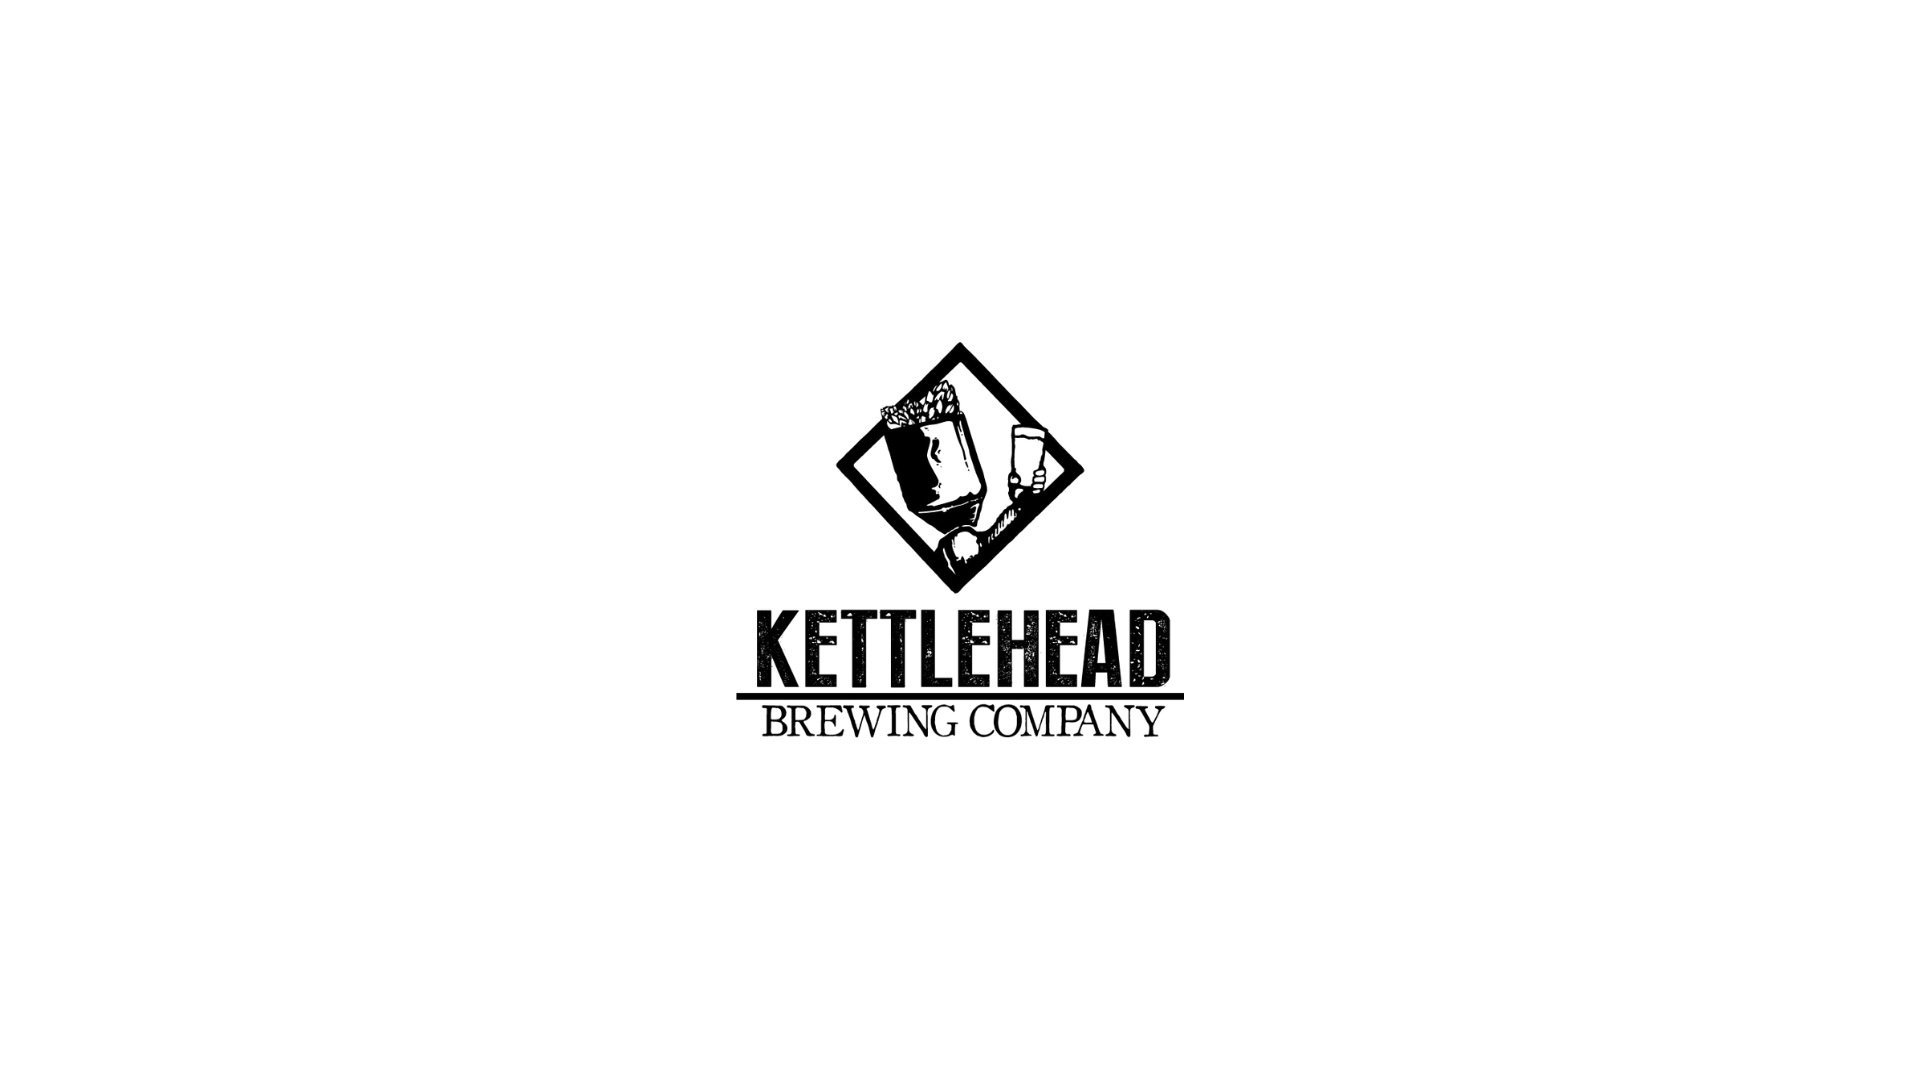 Kettlehead Brewing Company